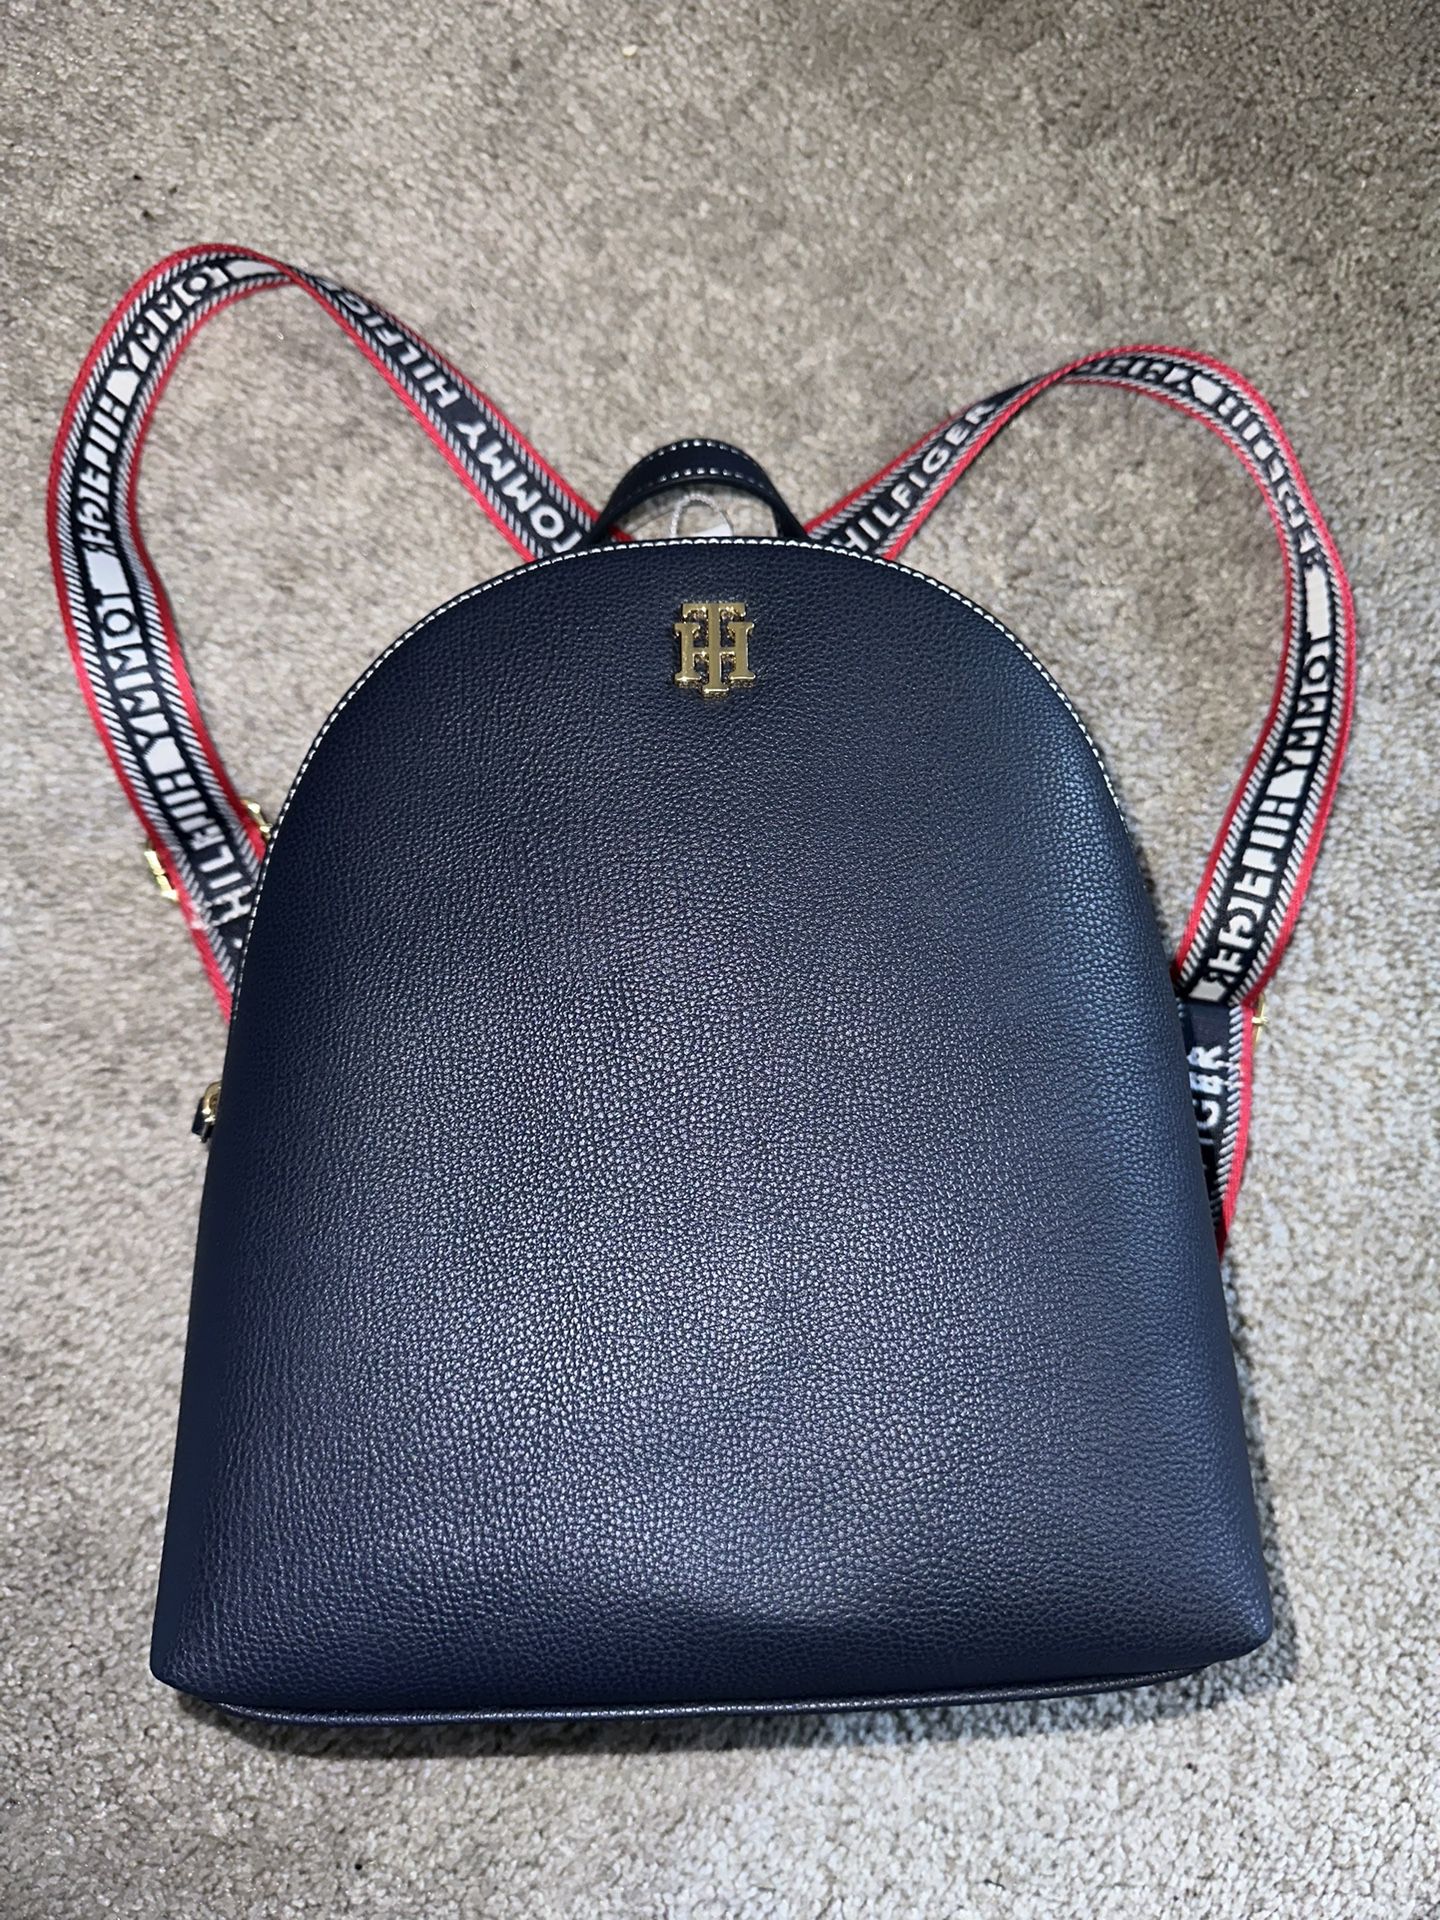 Brand New Tommy Hilfiger Backpack